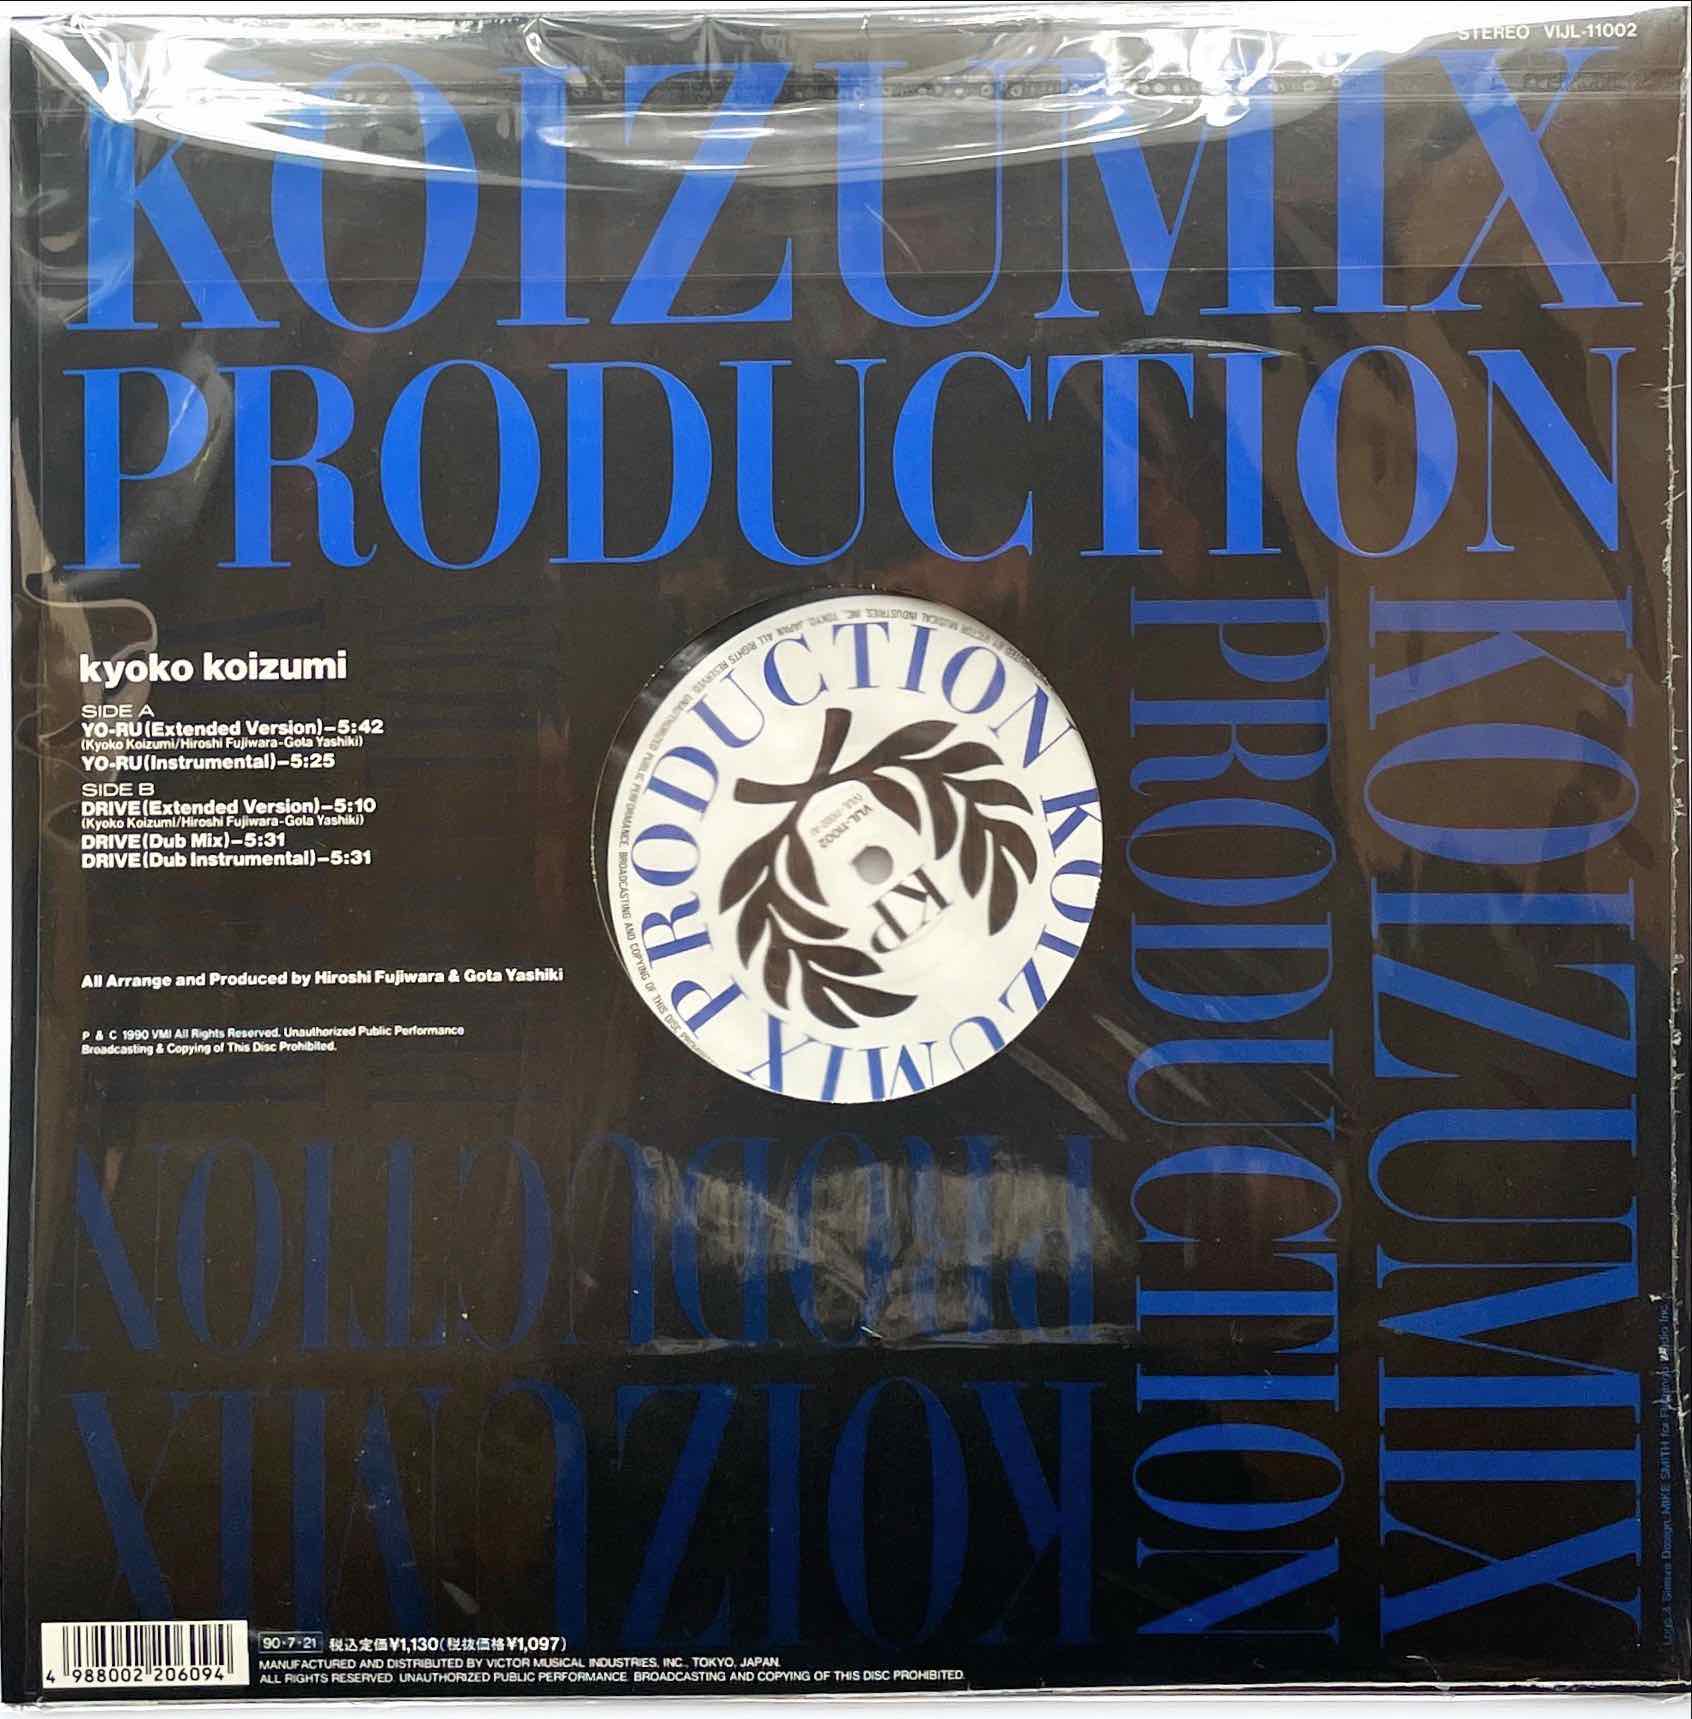 Kyoko Koizumi – Koizumix Production II 12 inch single sleeve image back